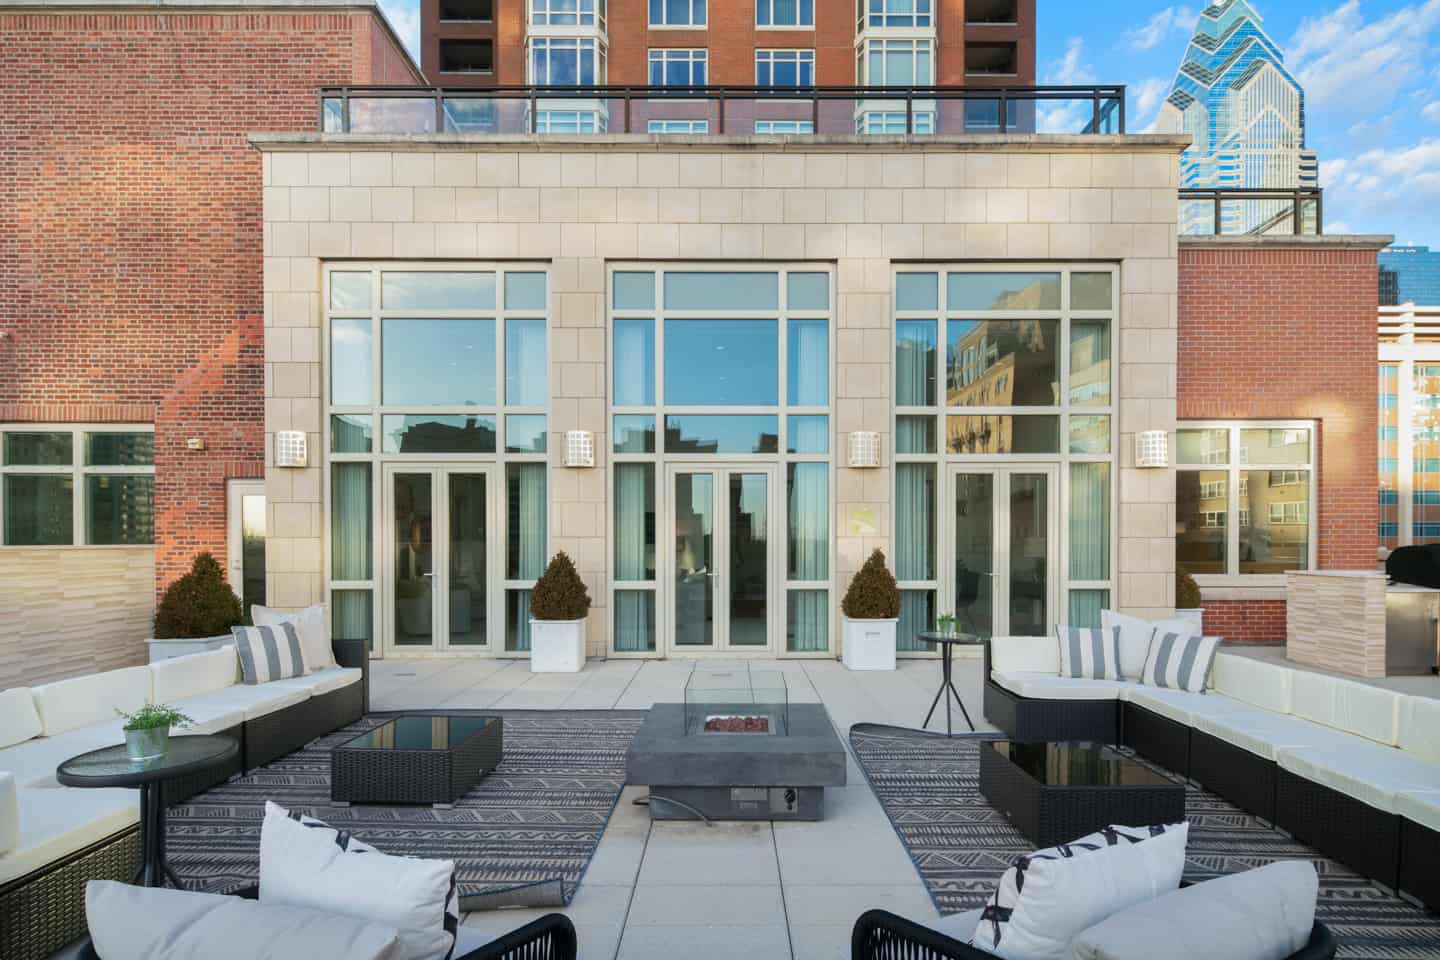 Real Estate Photograph of a Luxury Penthouse on Walnut Street in Philadelphia, PA